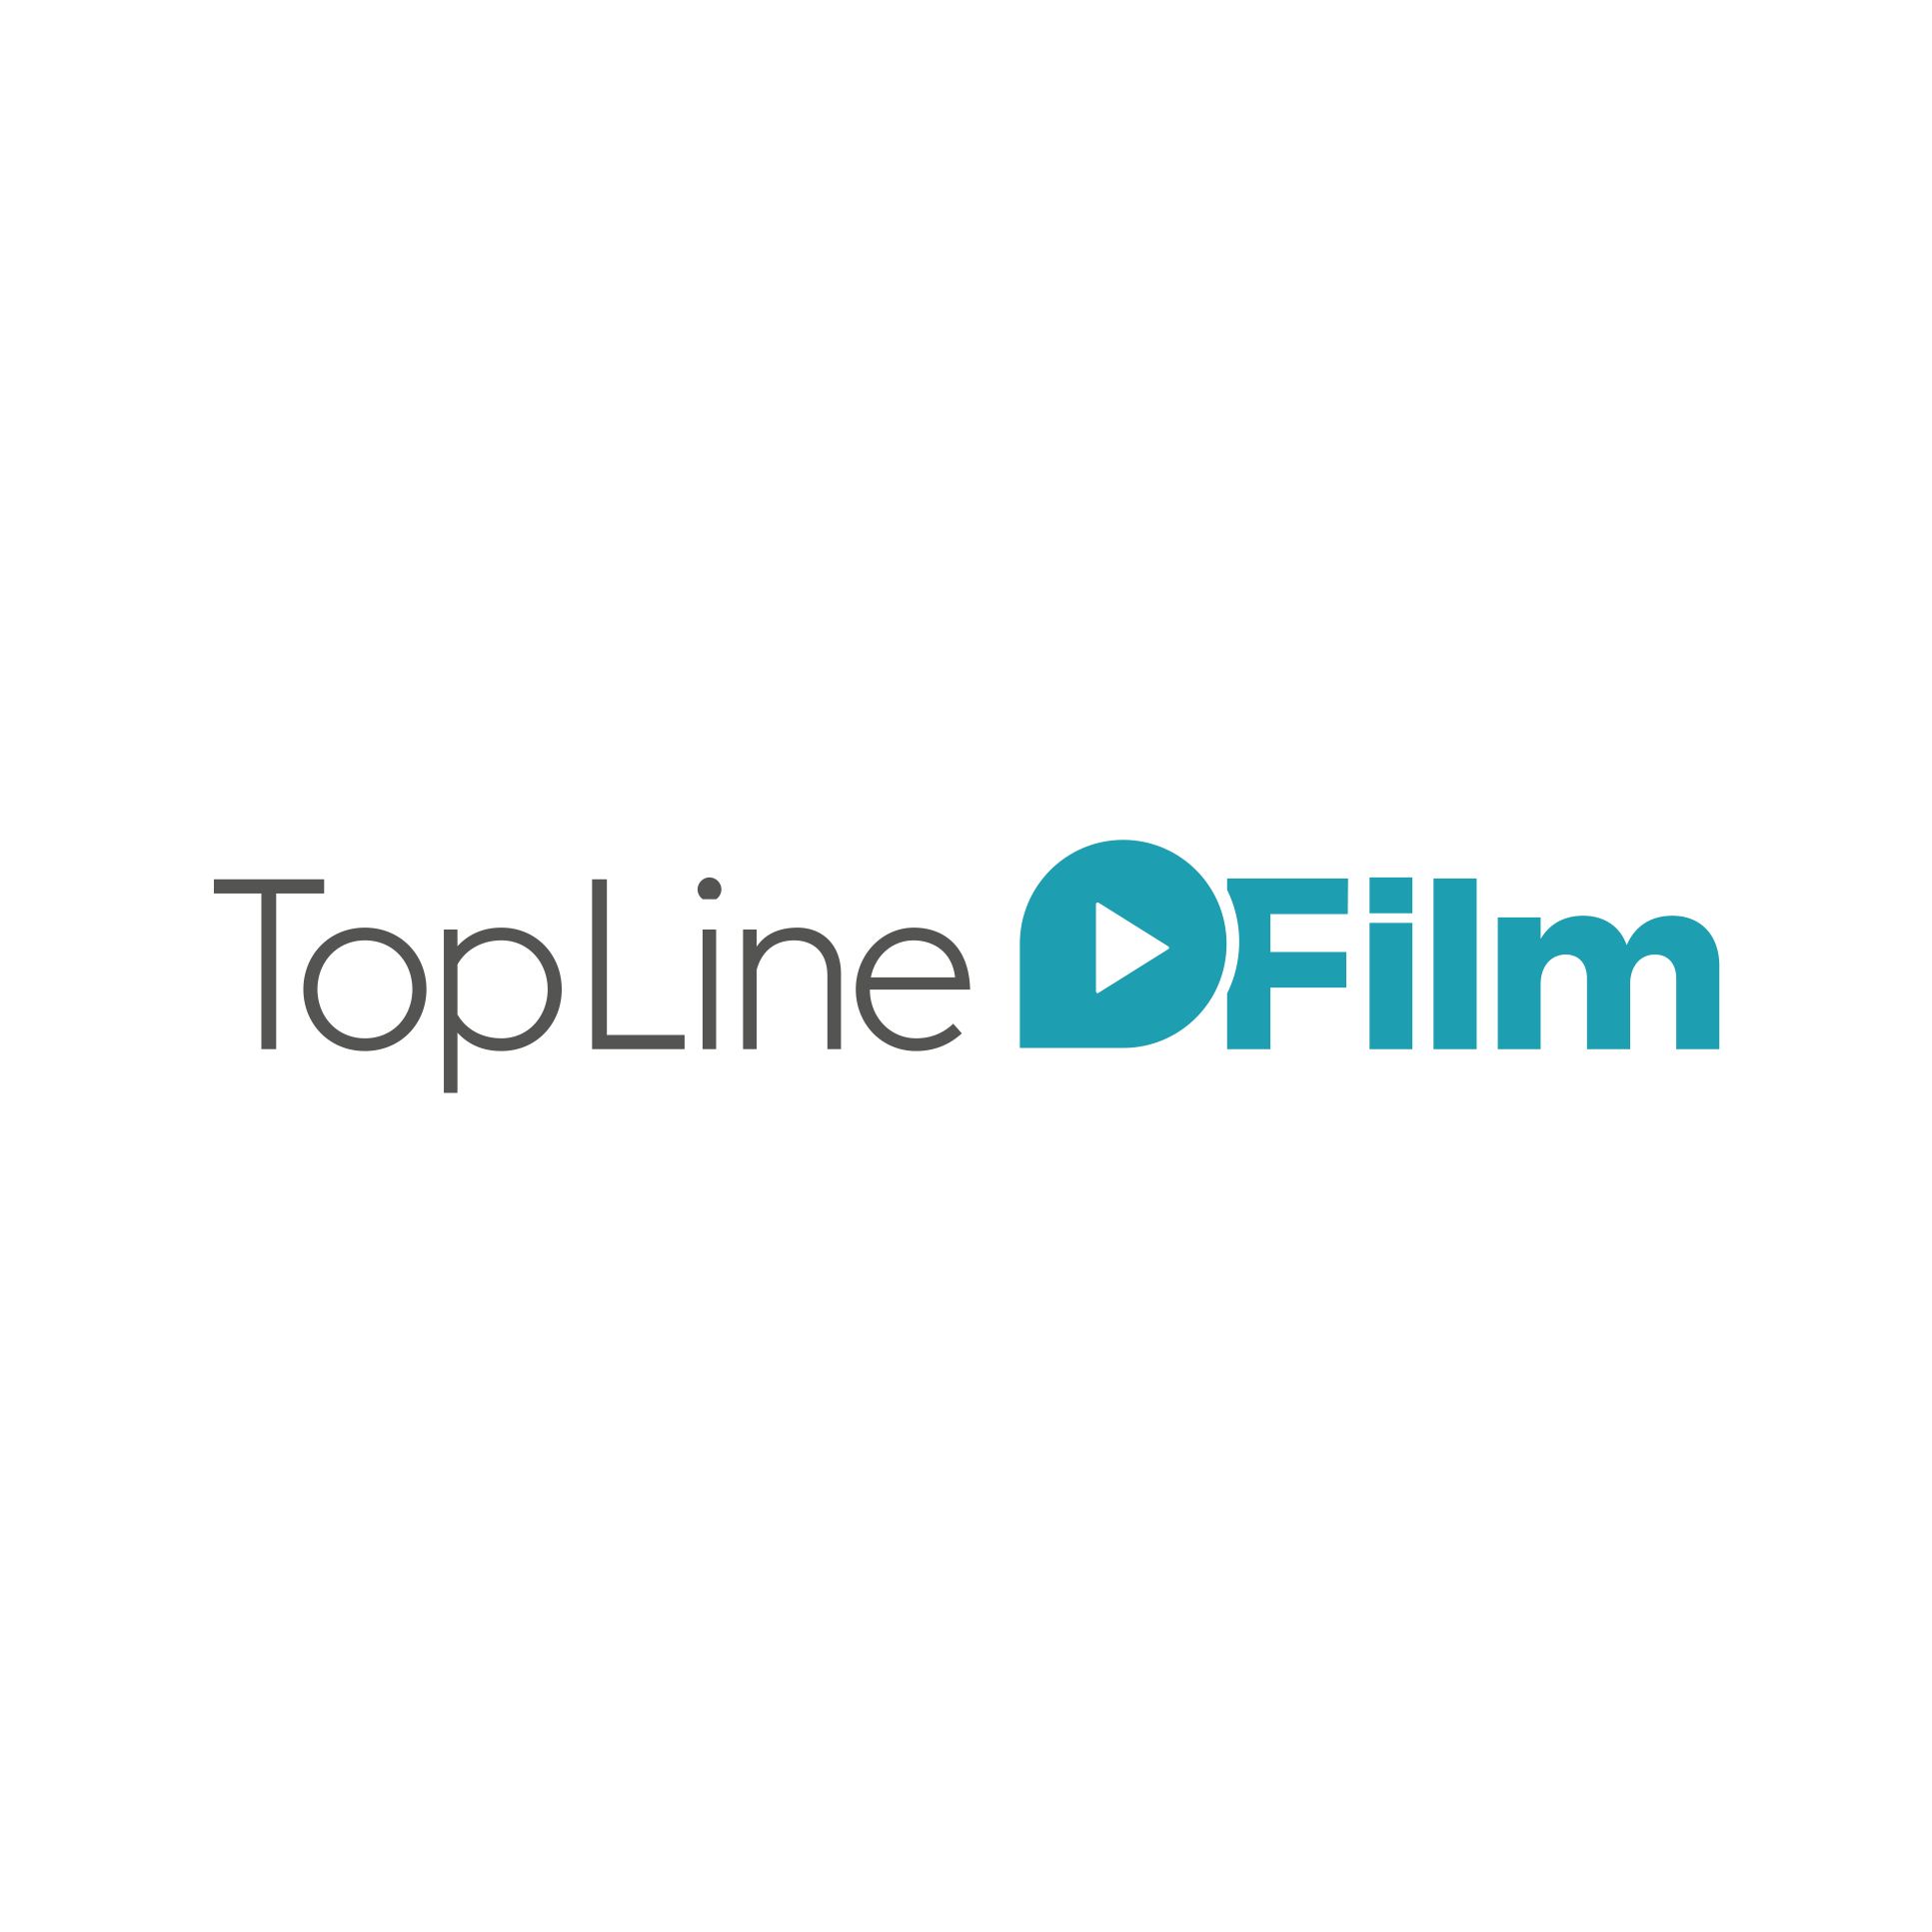 TopLine Film 로고